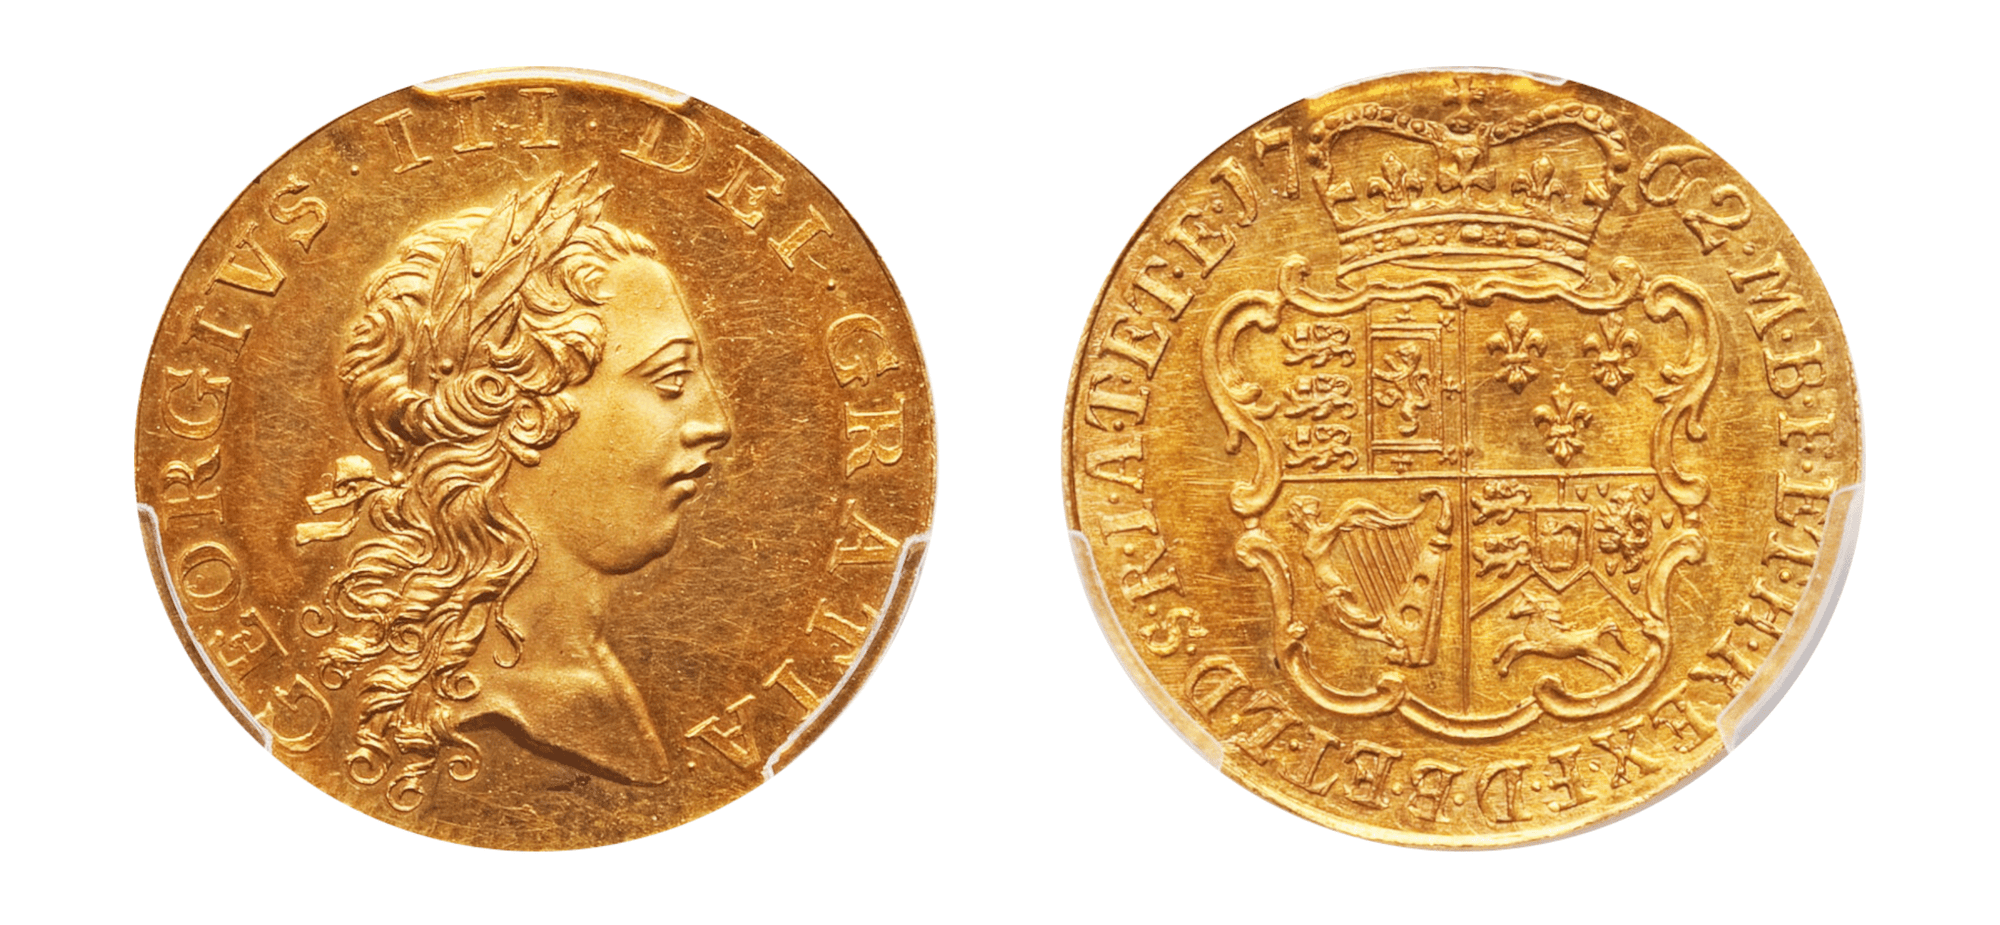 1762 George III Gold Proof Pattern 1/2 Guinea PCGS PR63 Cameo - Hard Asset Management, Inc